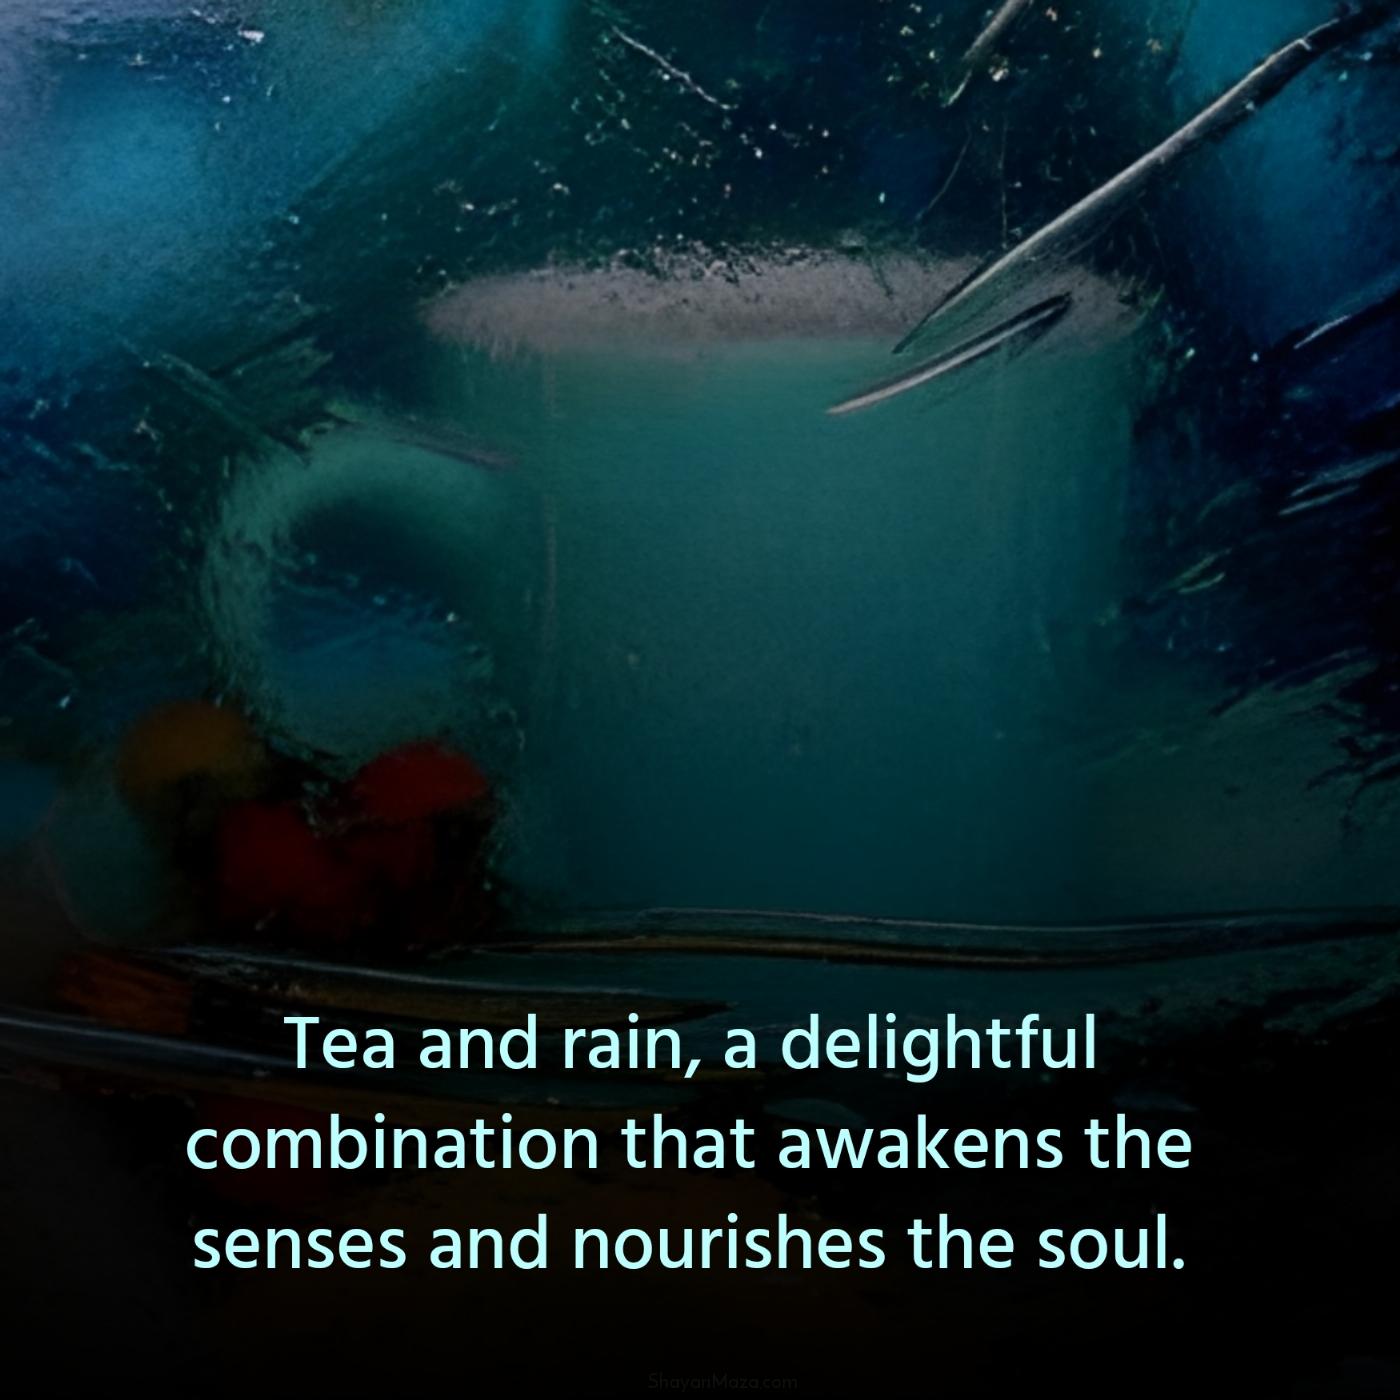 Tea and rain a delightful combination that awakens the senses